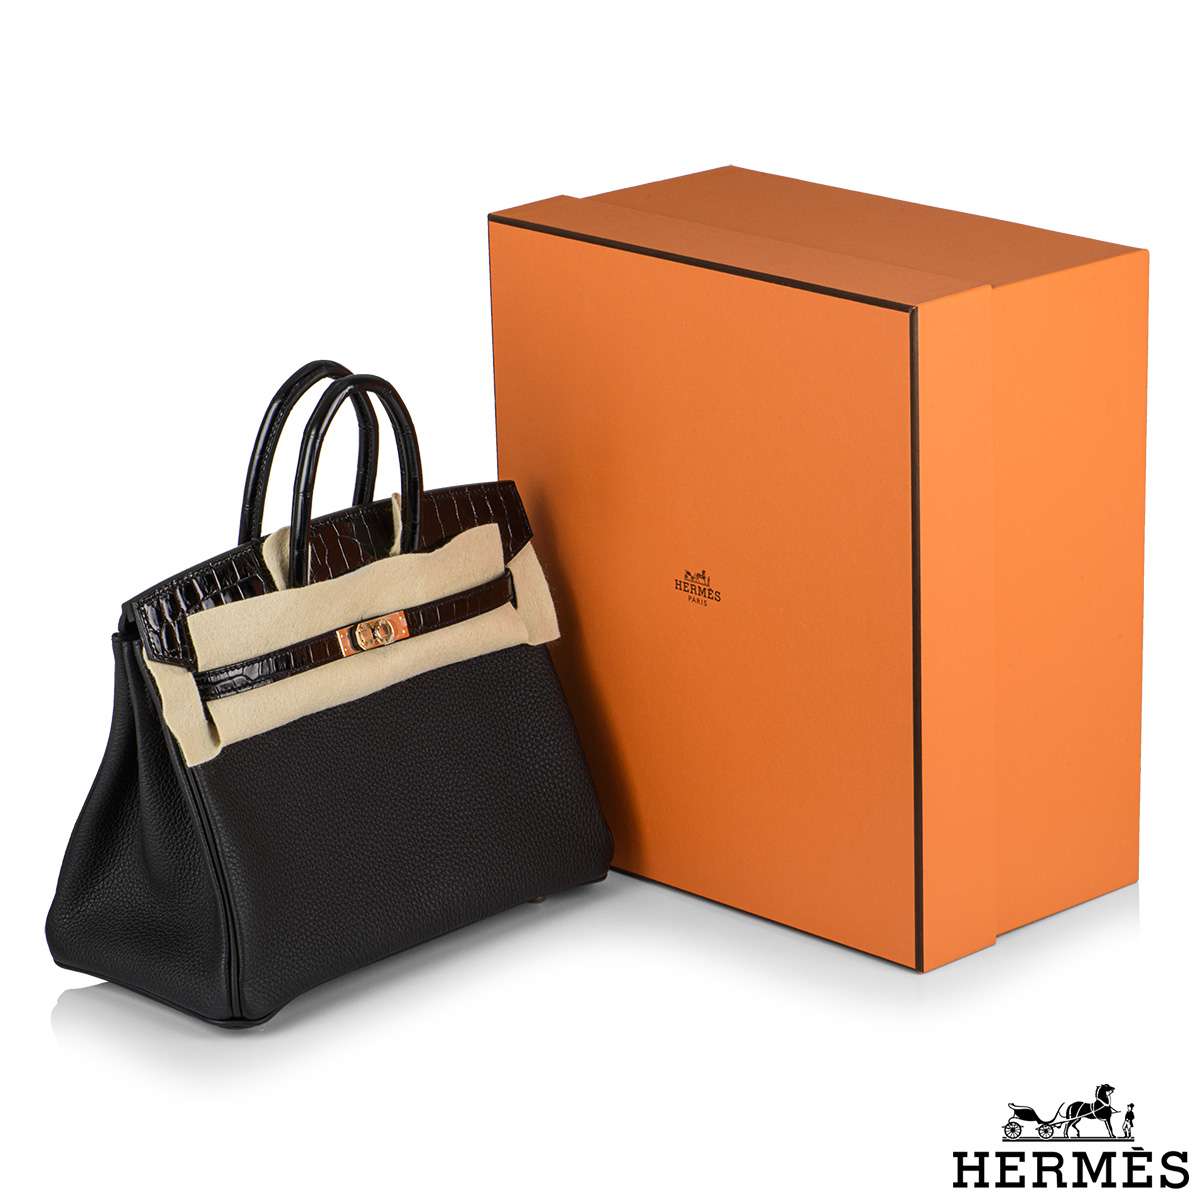 Ruelamode Pte Ltd - Brand New Hermes Birkin 25 🔹Gris Tourterelle Togo  🔹Rose Gold Hardware 🔹Stamp C (2019 receipt) 🔹Sgd21,500 For more  information please contact us at +65 9179 4777 or sales@ruelamode.com